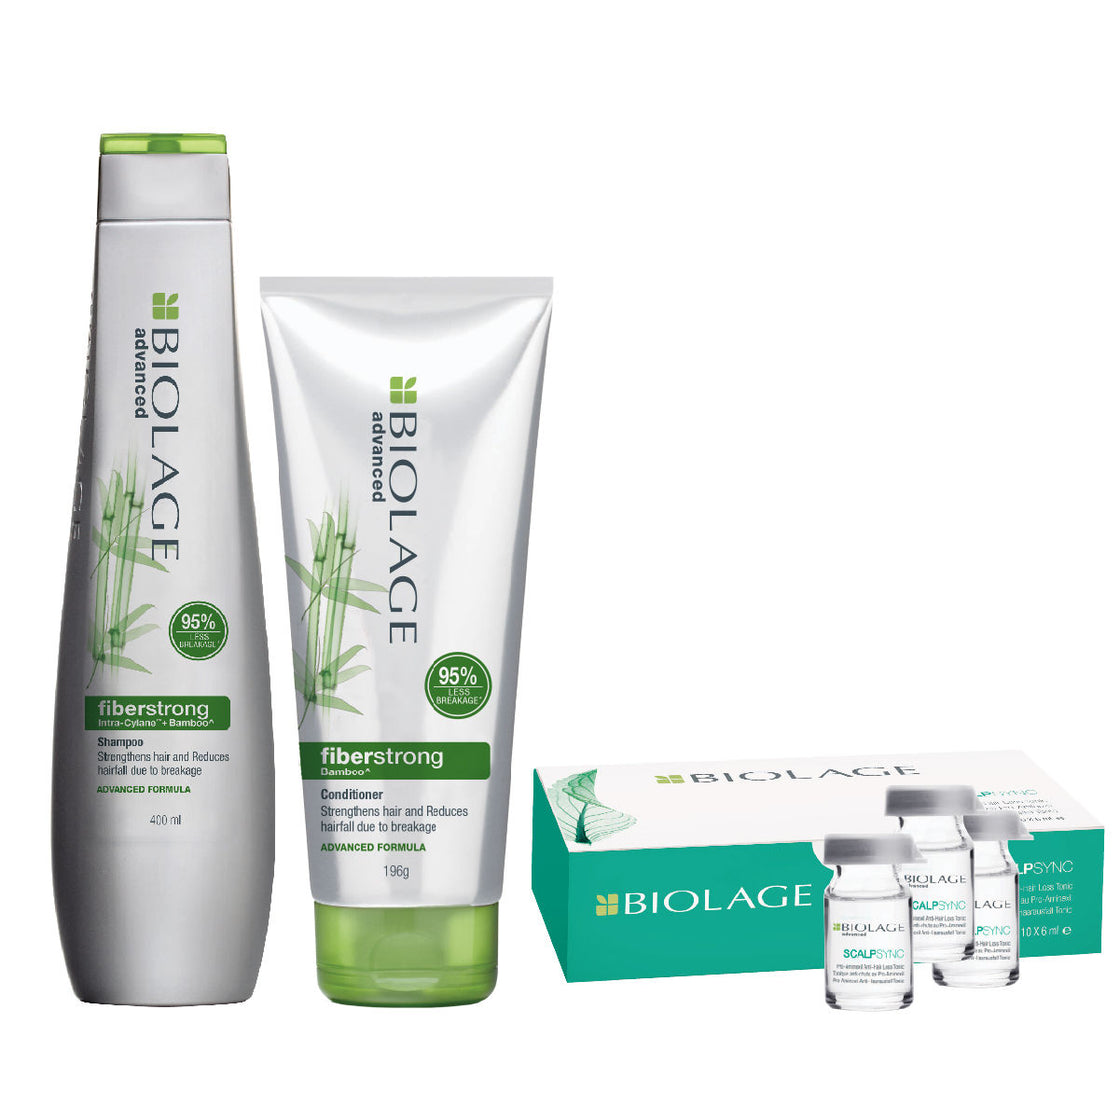 Matrix Biolage Anti-hairfall Regime With Fiberstrong Shampoo, Conditioner & Aminexil Hair Treatment